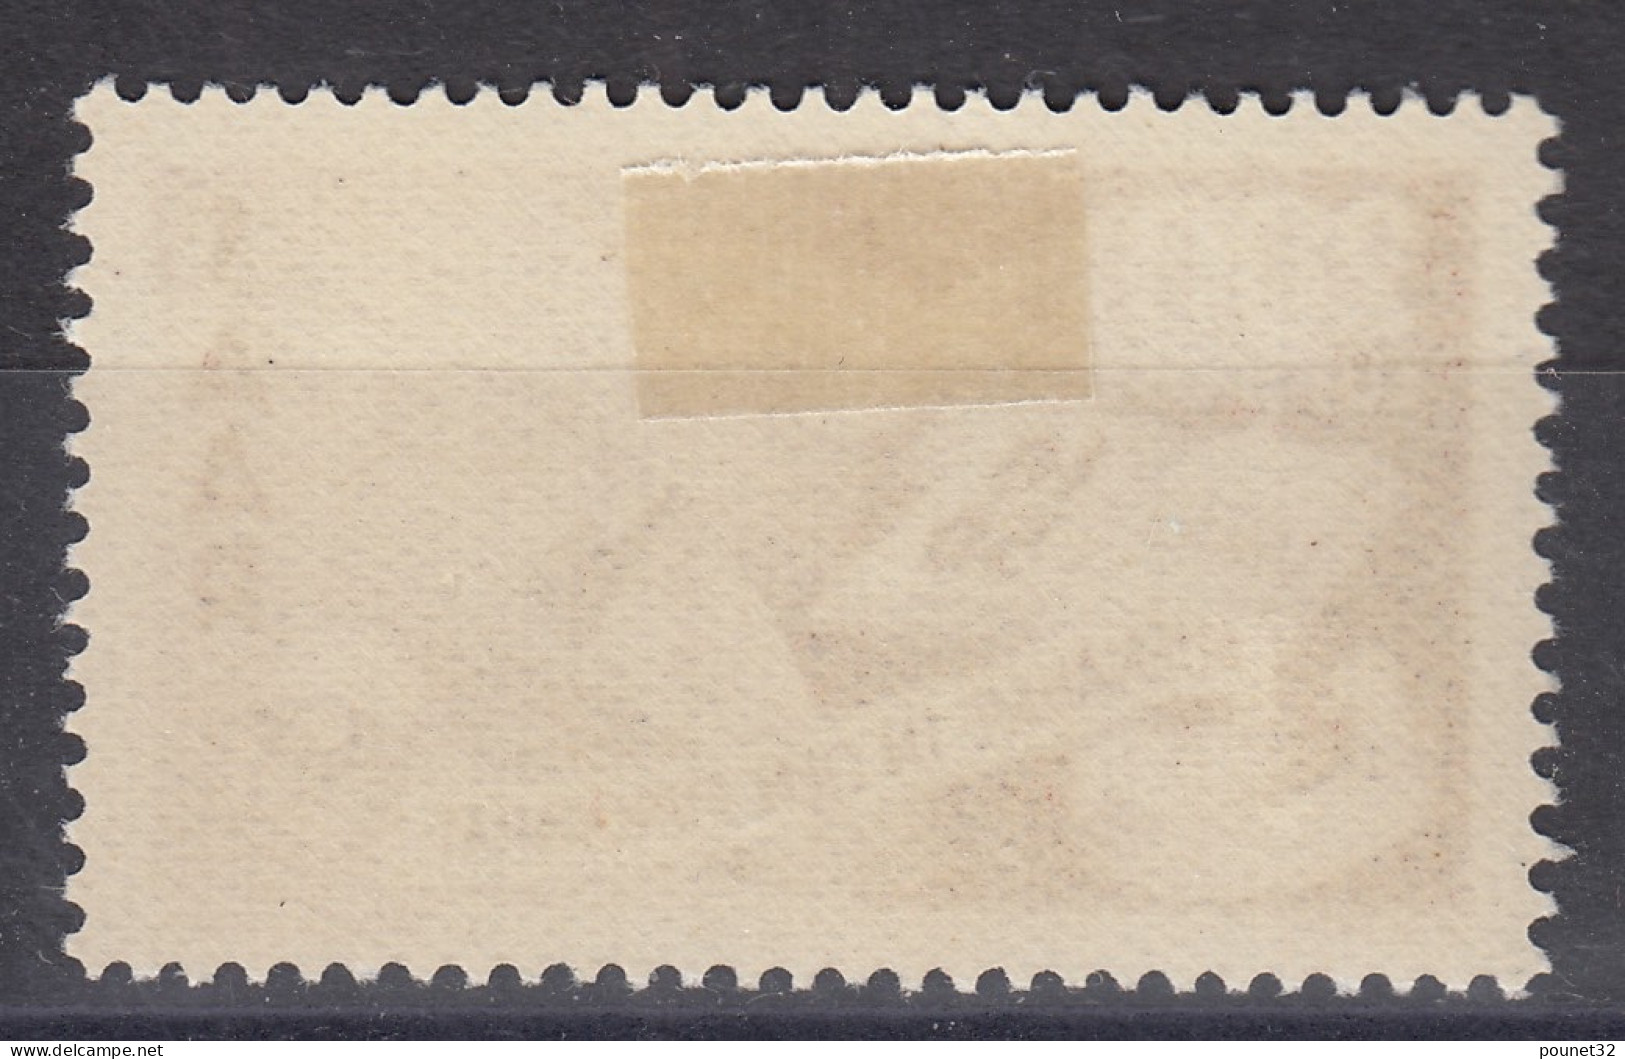 HAUT-SENEGAL & NIGER : BALLAY 1F NOIR N° 15 NEUF * GOMME AVEC TRACE DE CHARNIERE - Unused Stamps